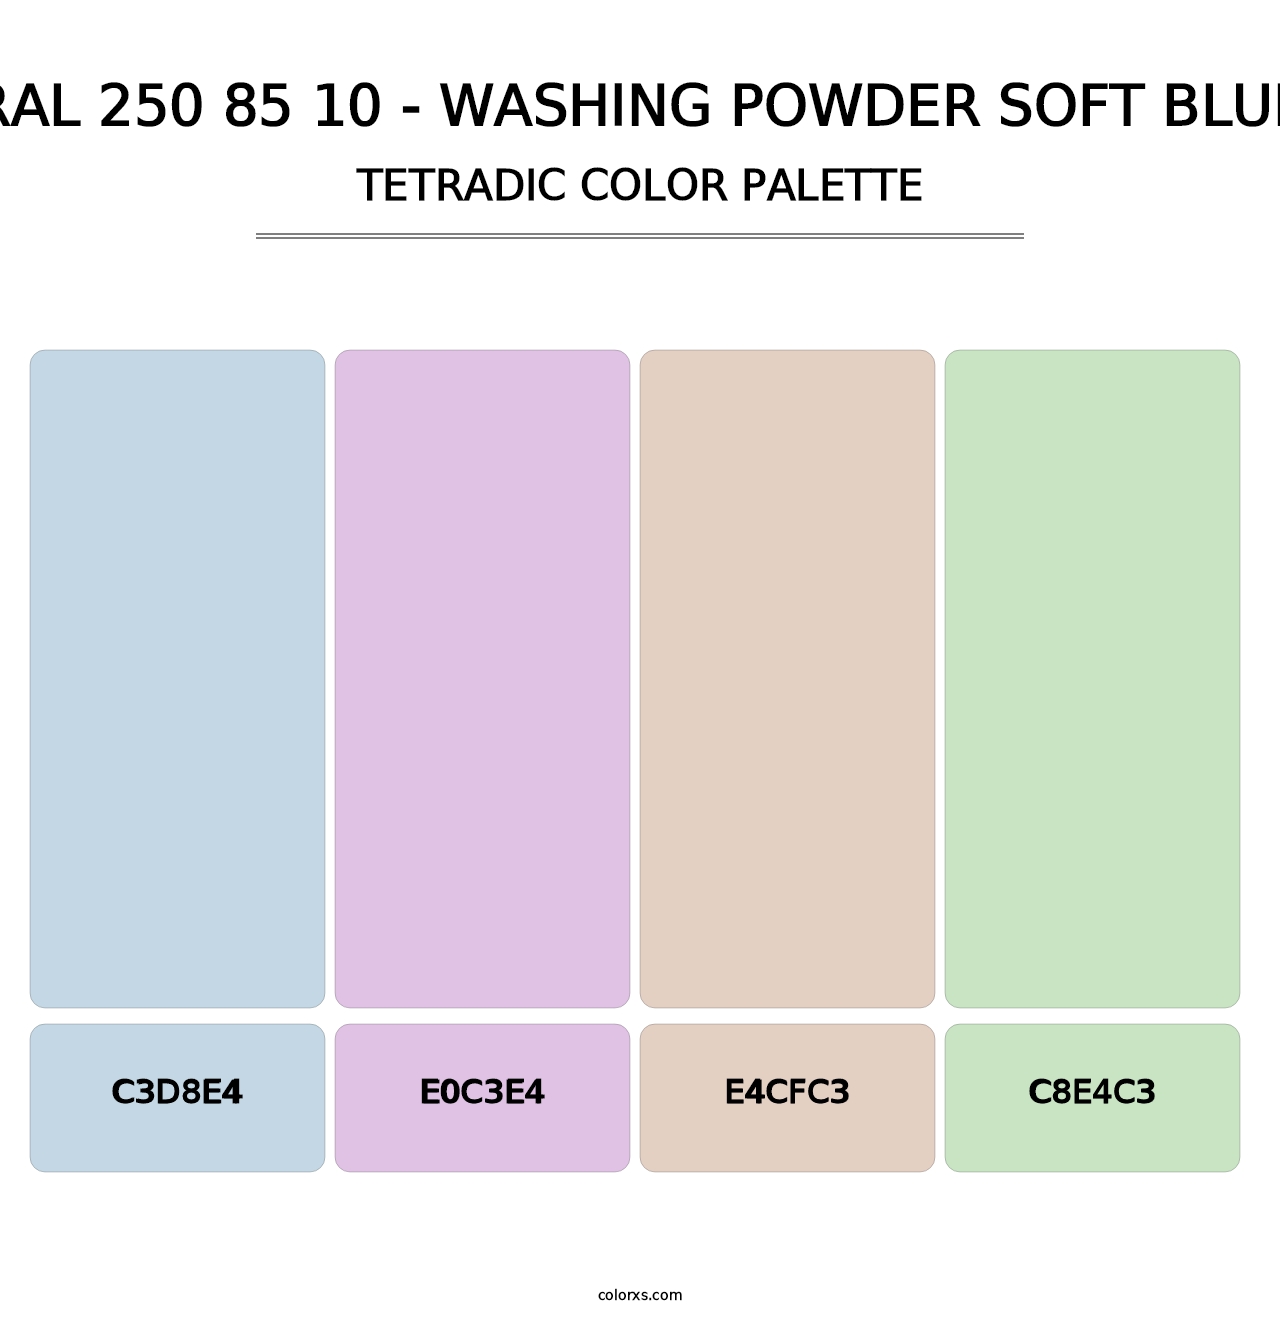 RAL 250 85 10 - Washing Powder Soft Blue - Tetradic Color Palette